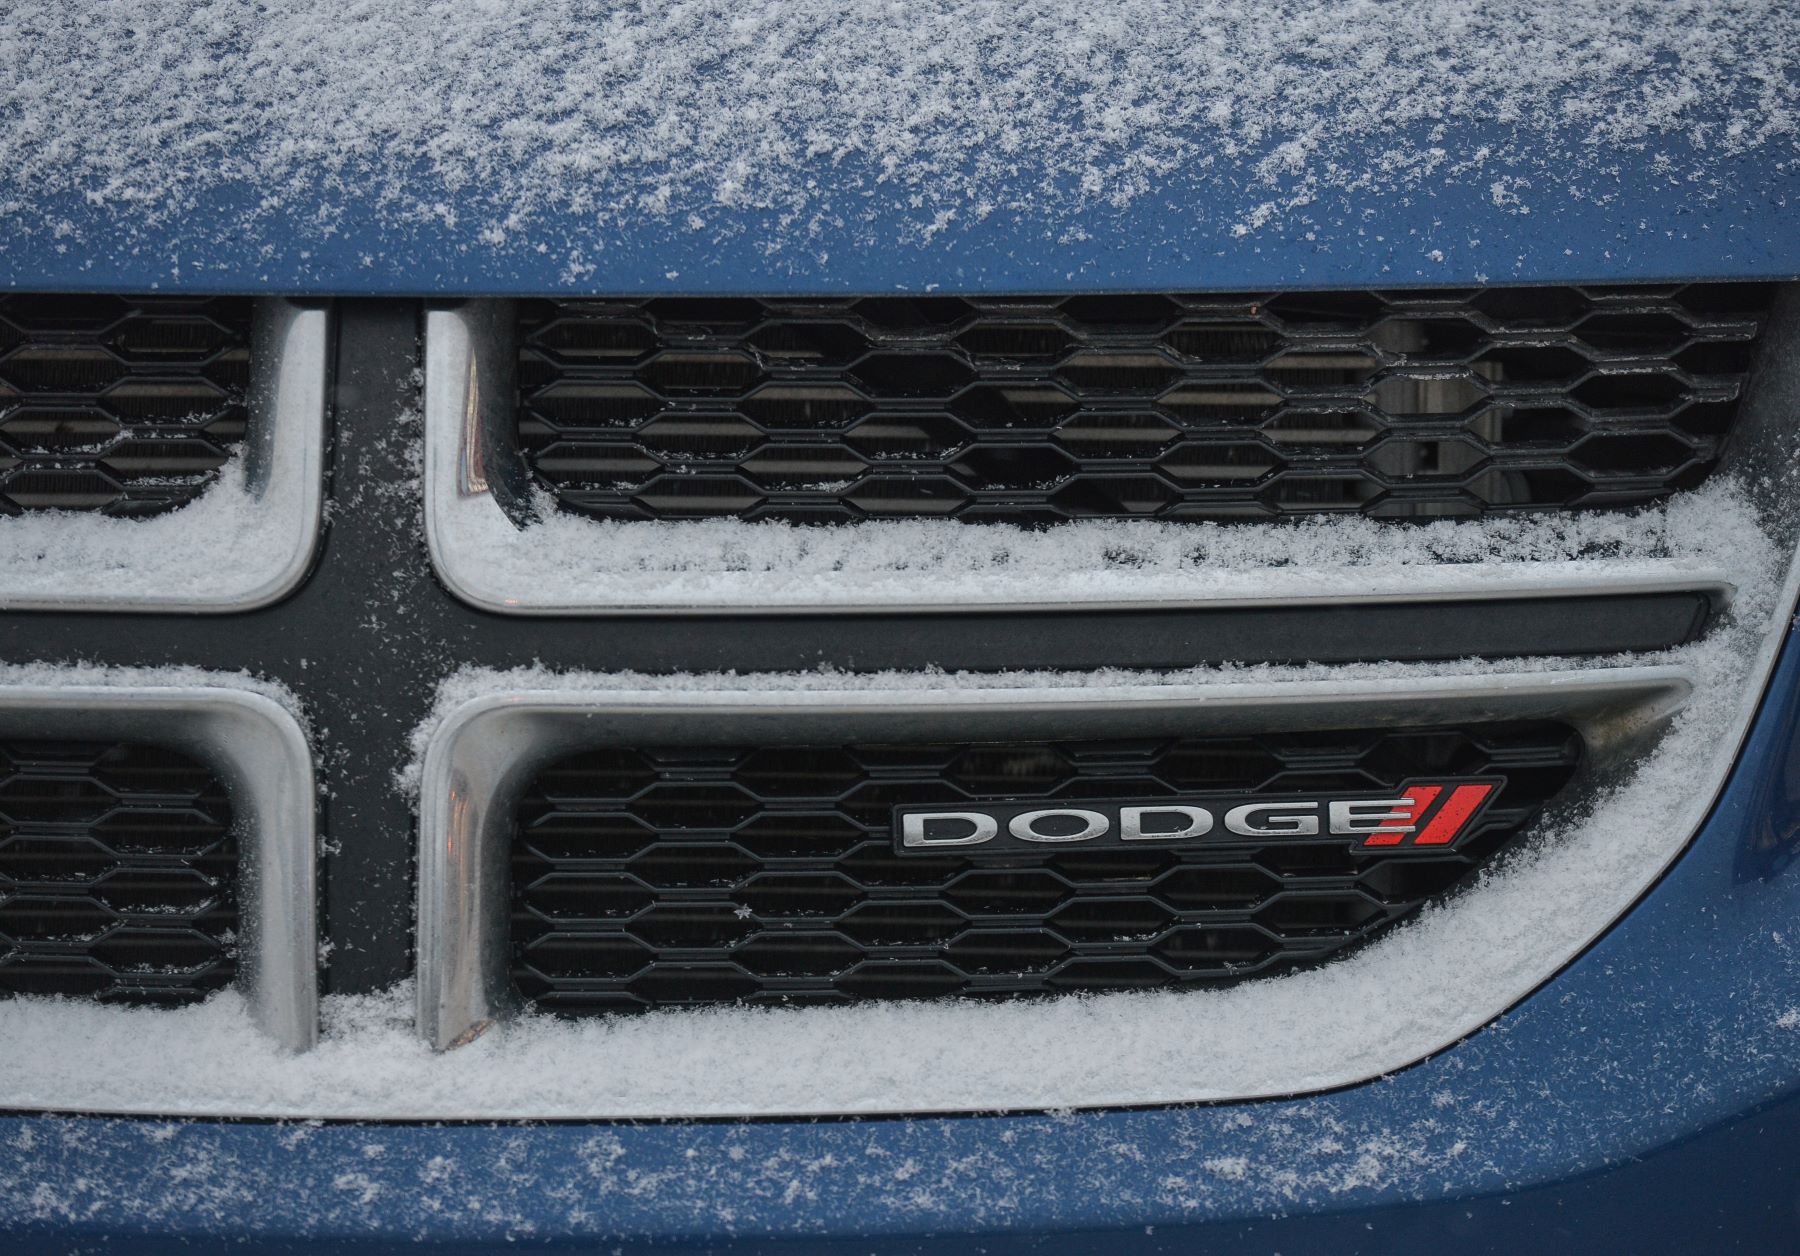 The Dodge logo covered in snow seen in Edmonton, Alberta, Canada